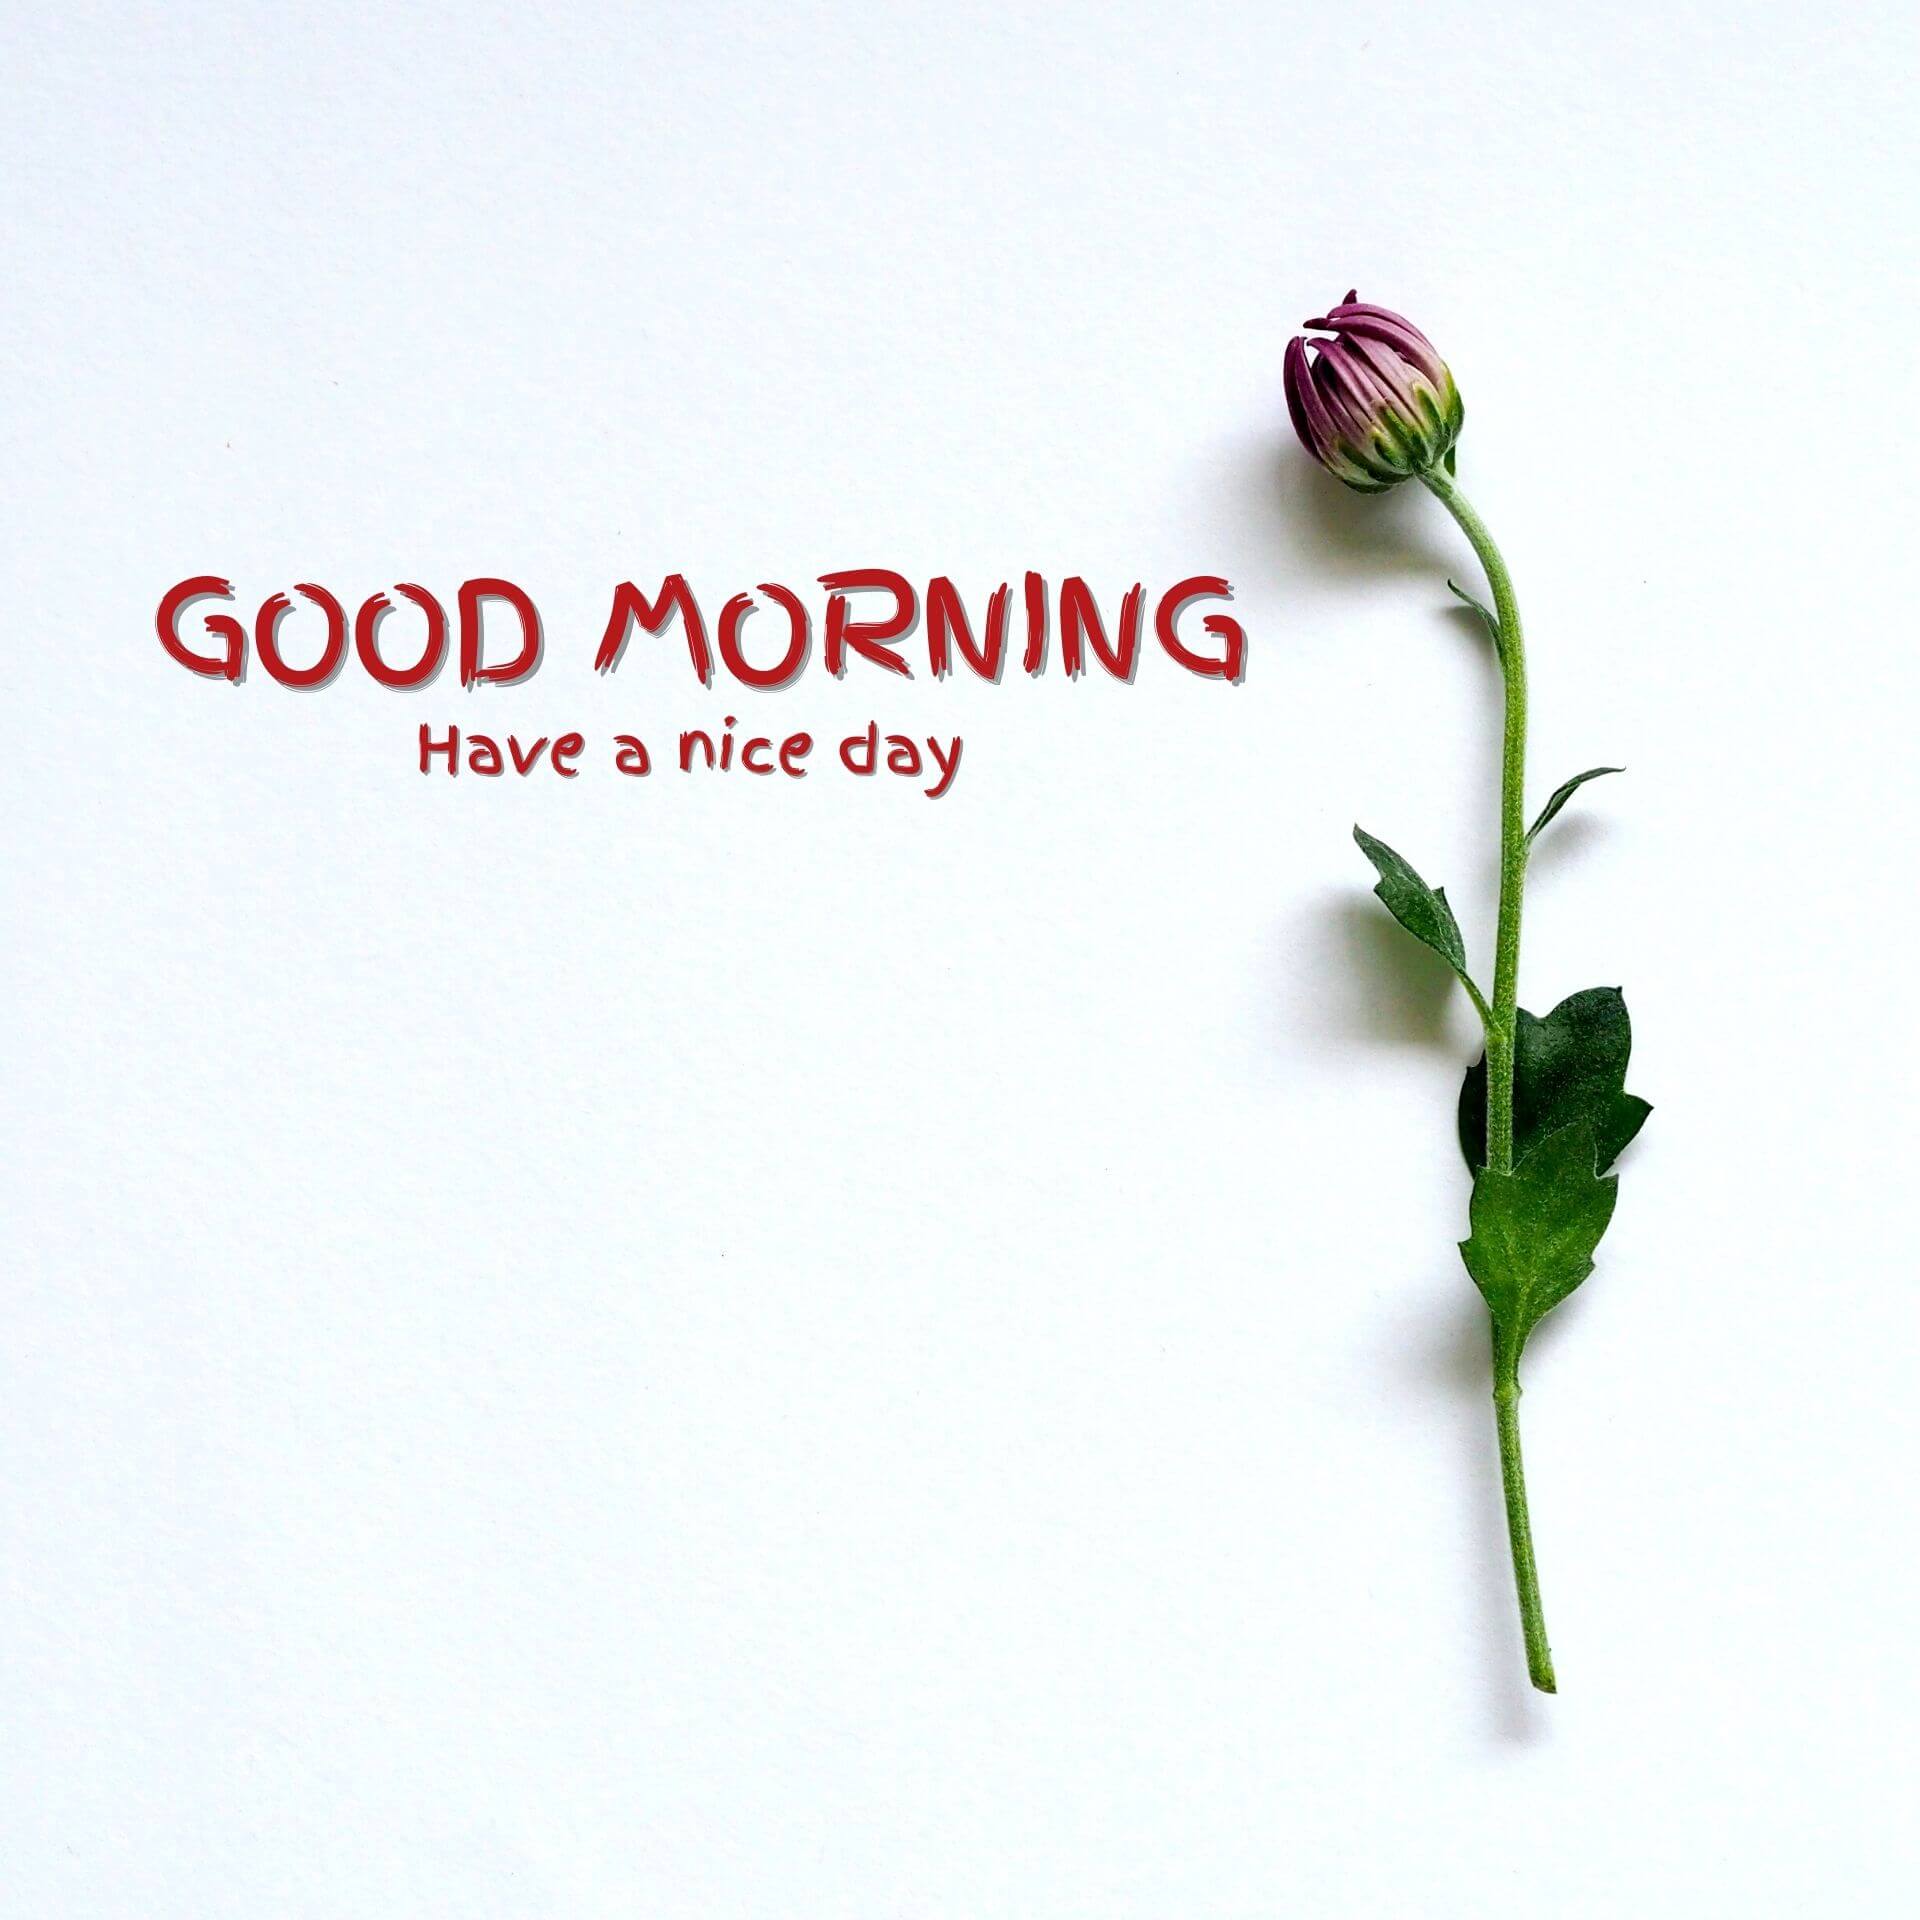 Flower Good Morning Wallpaper HD Download